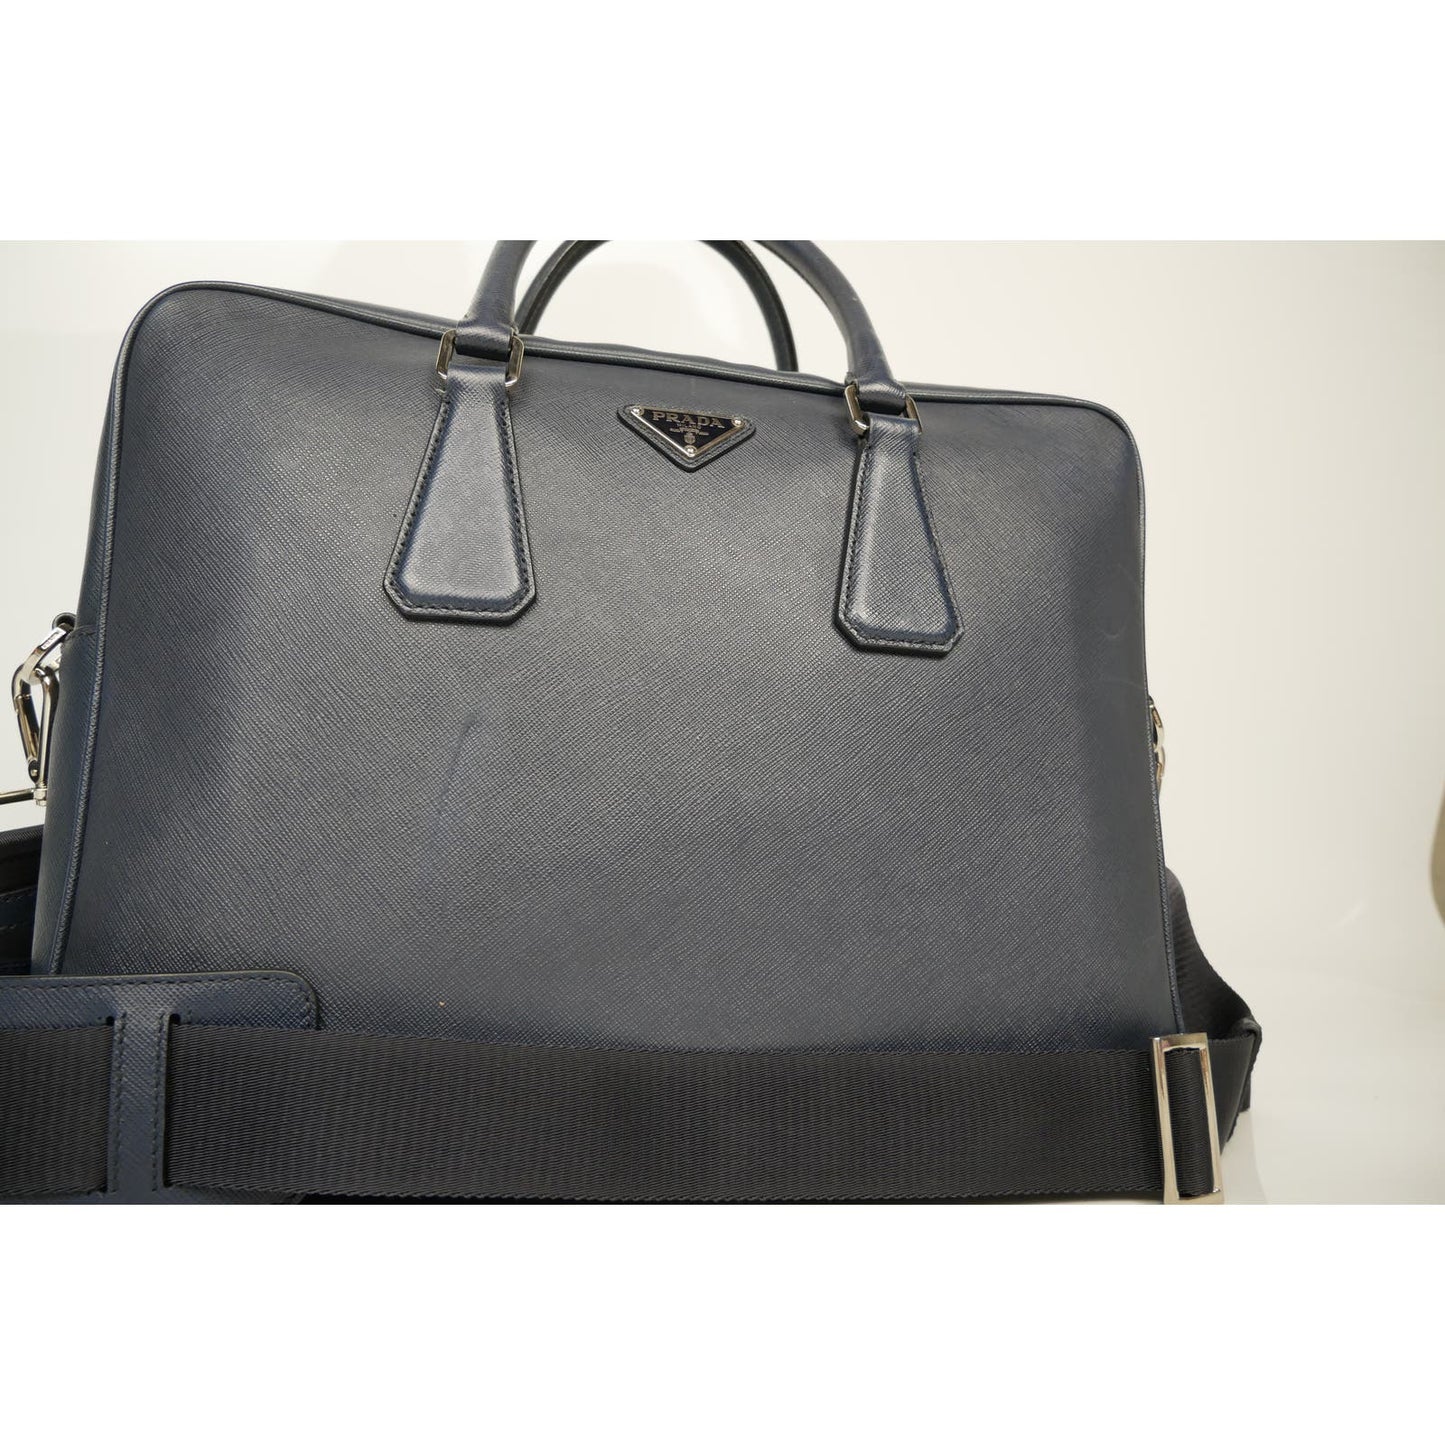 Prada Saffiano Leather Briefcase